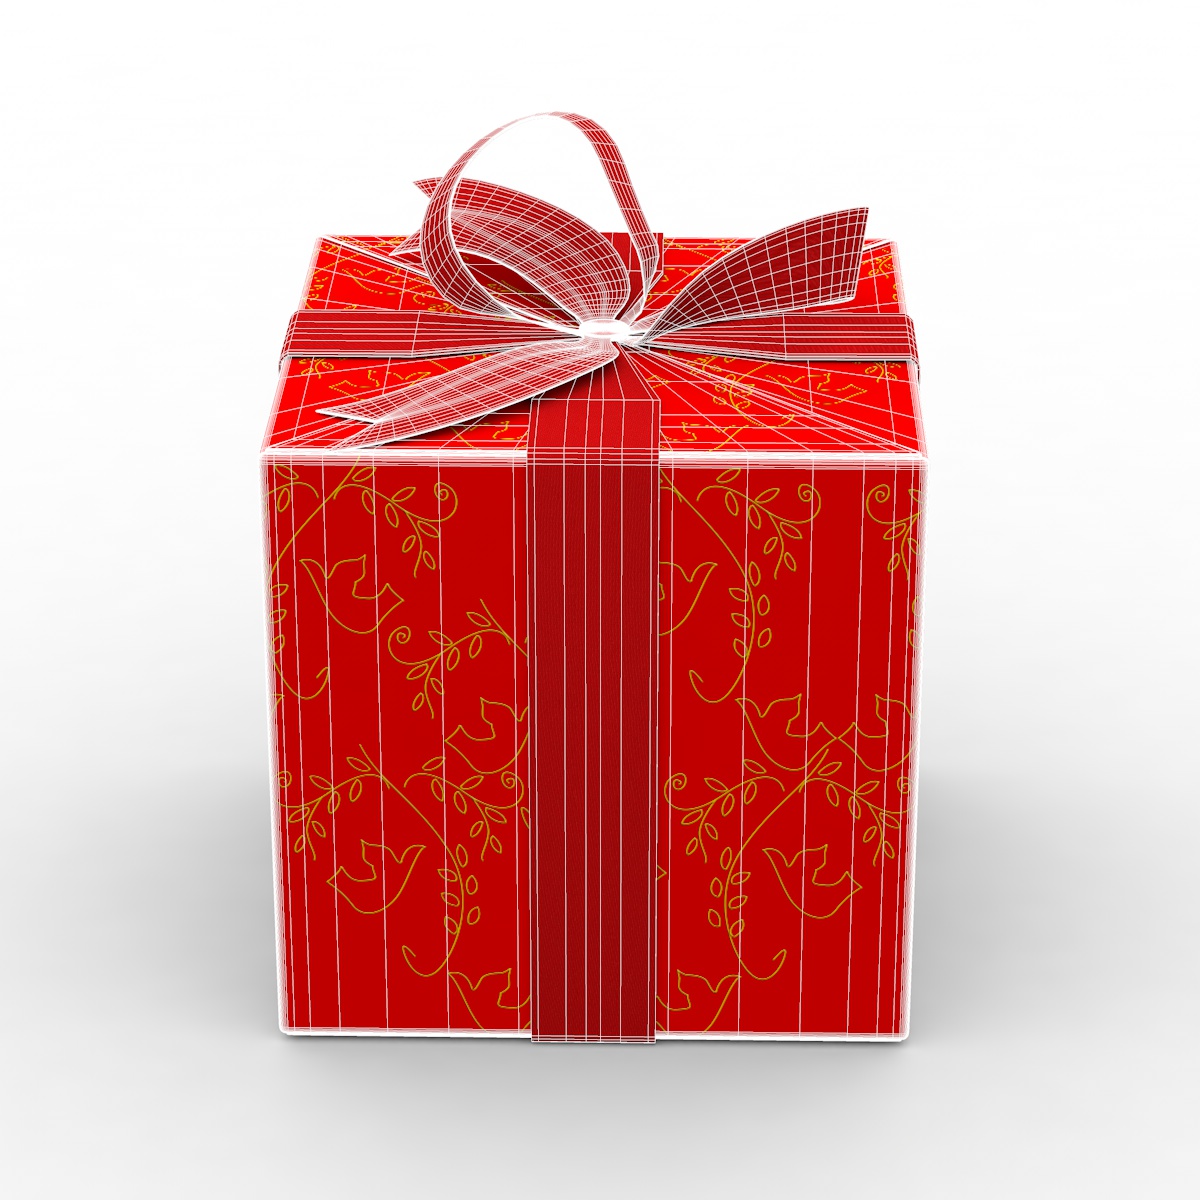 Caja de regalo modelo 3d